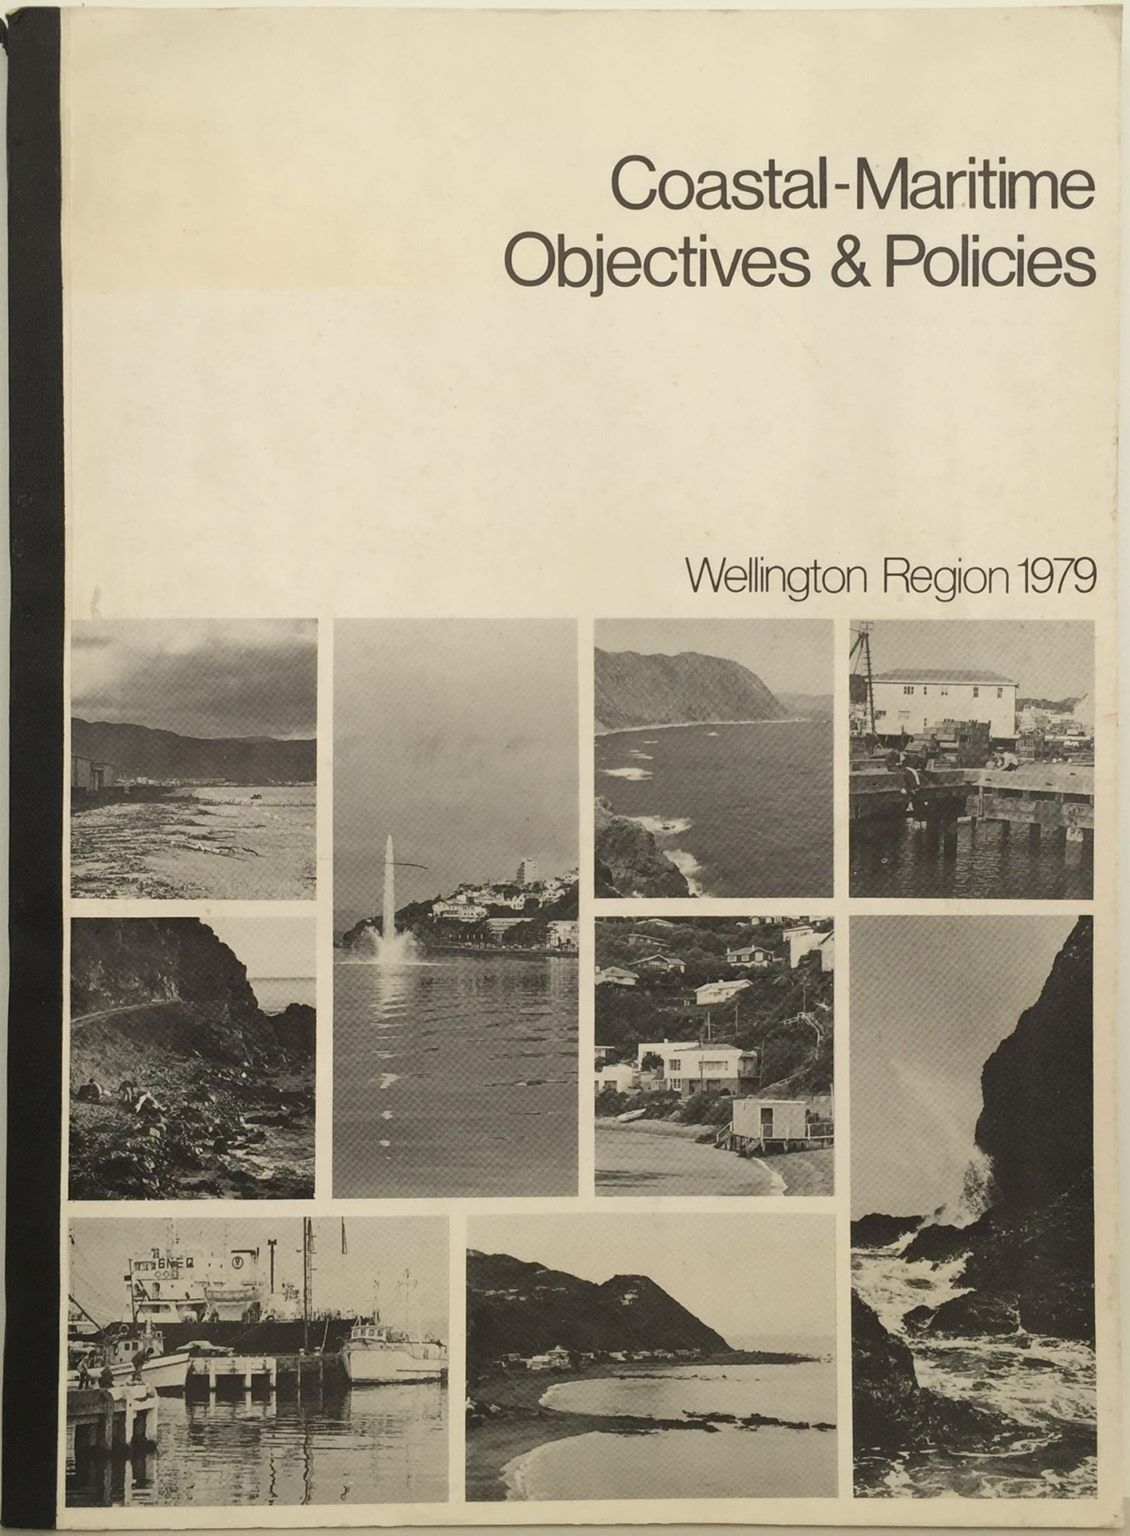 Coastal-Maritime Objectives & Policies - Wellington Region 1979